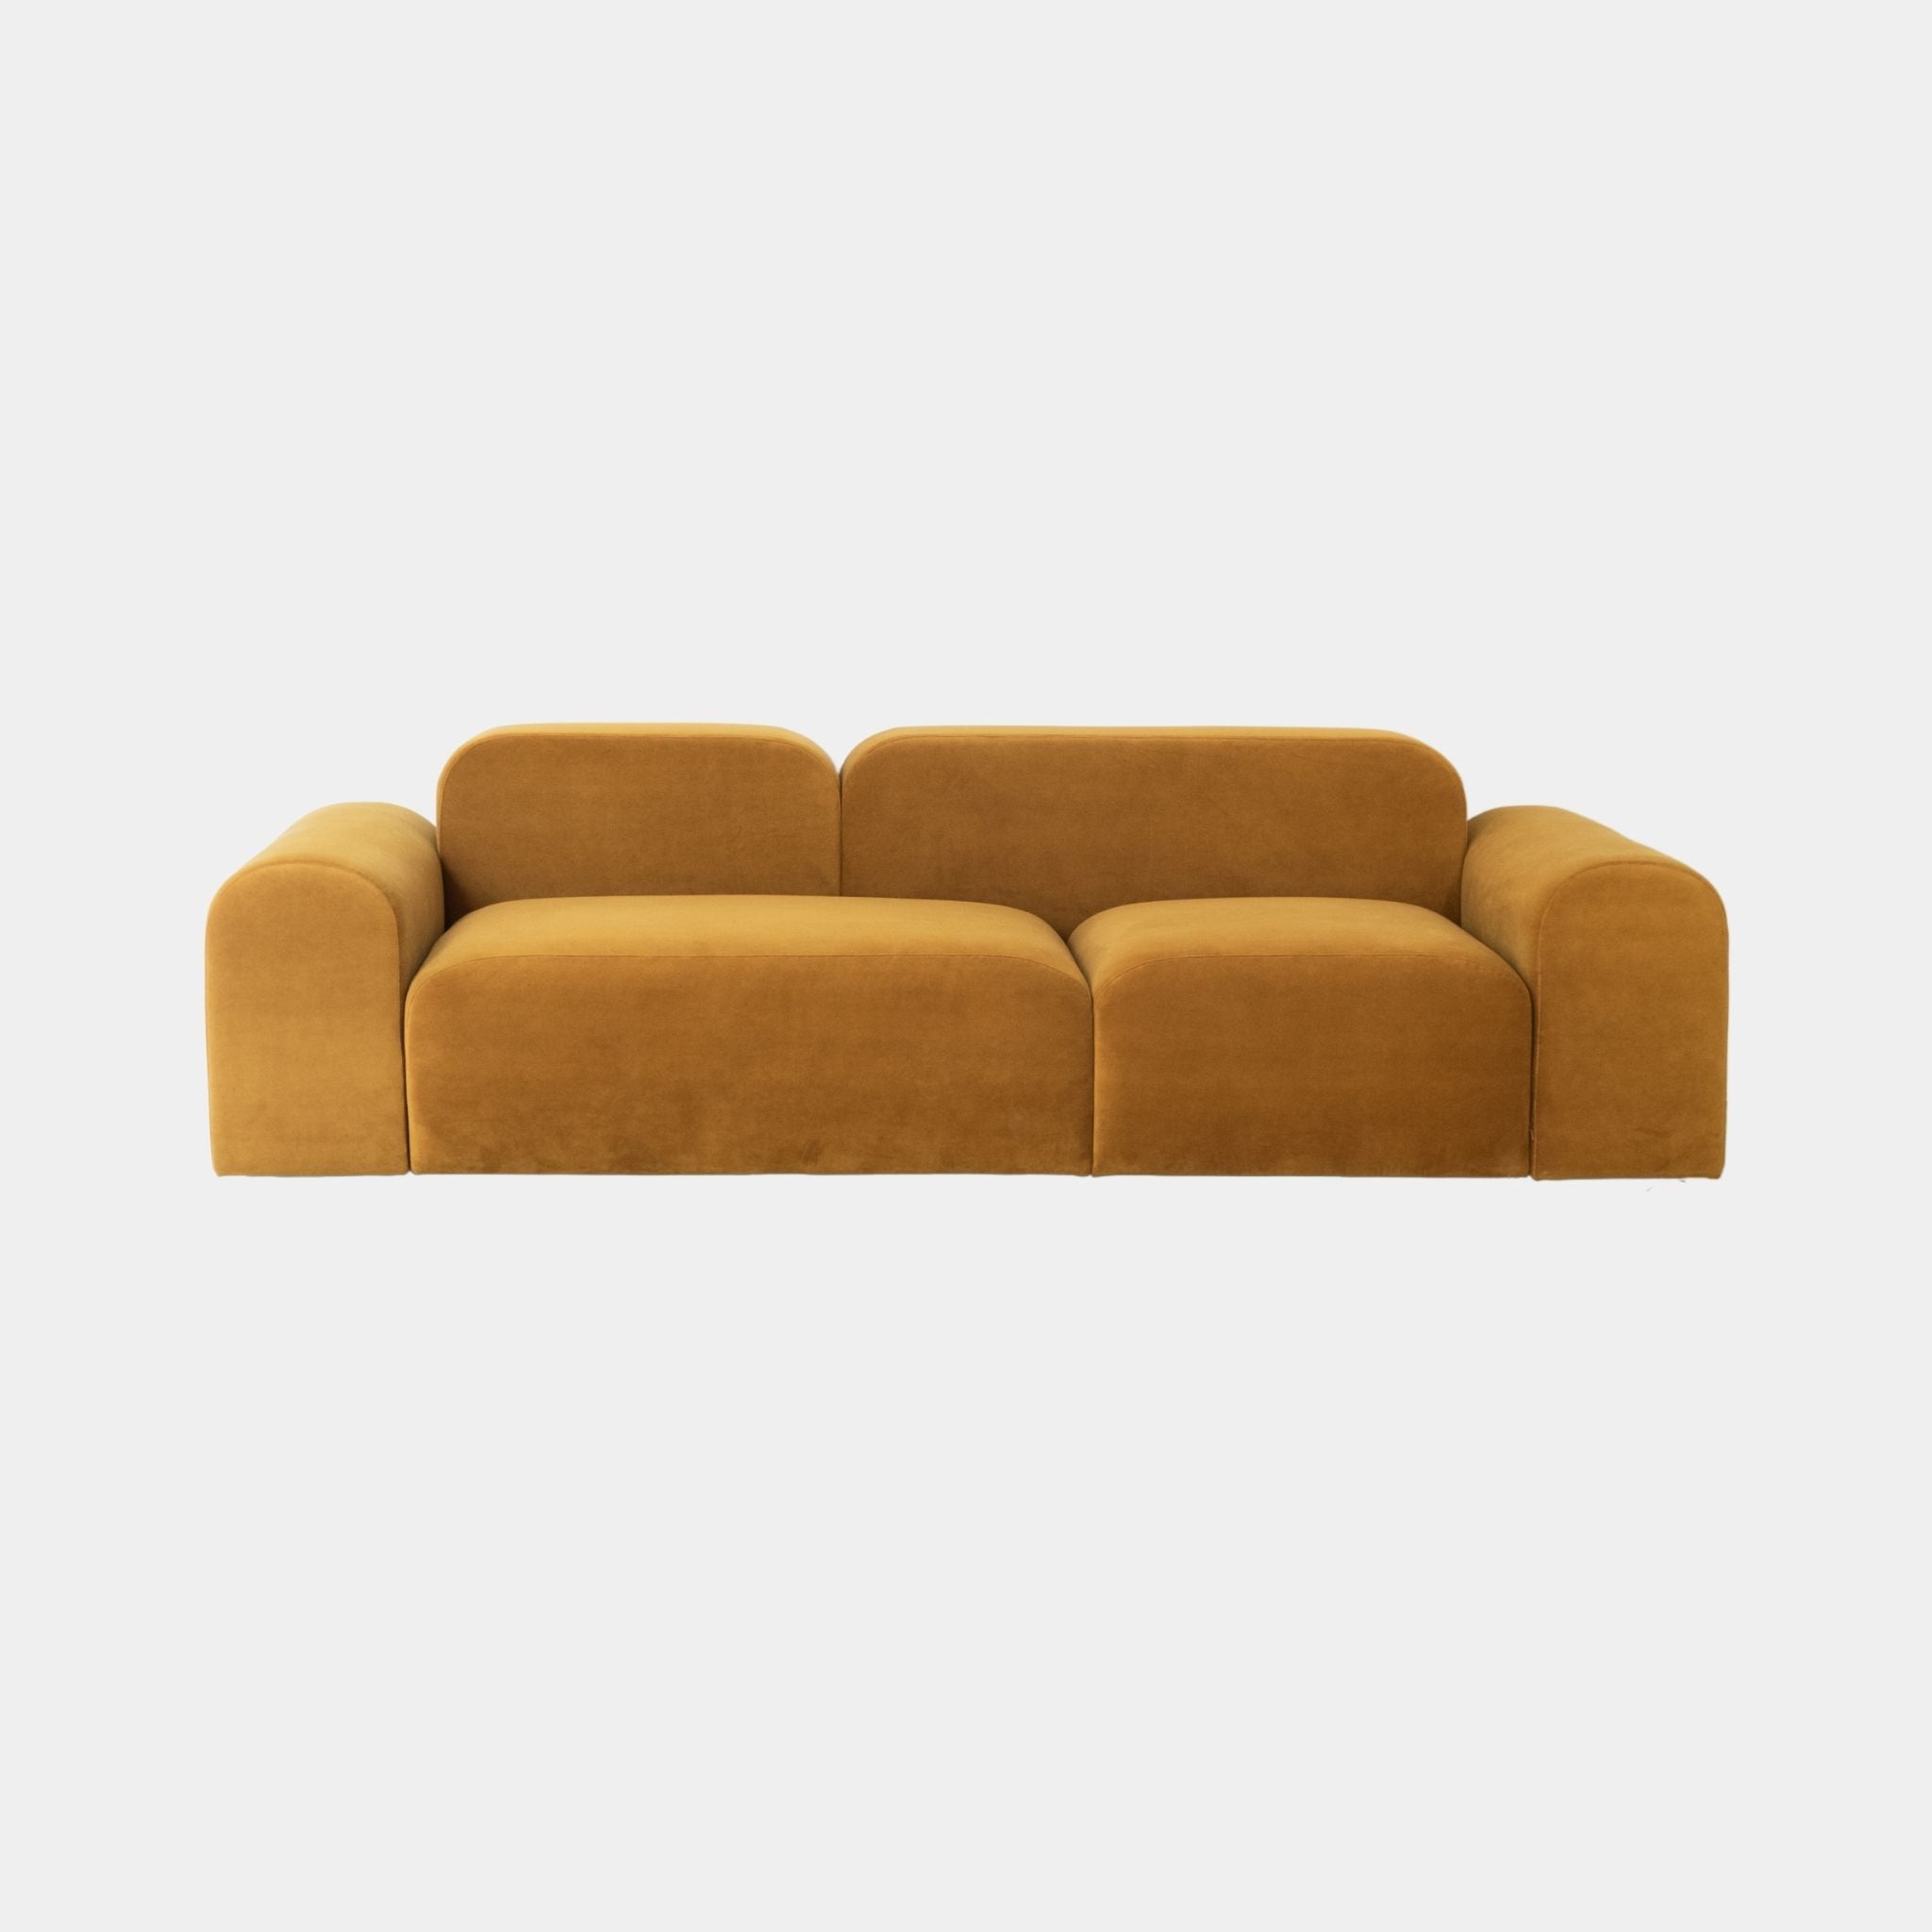 Roll Sofa - The Feelter